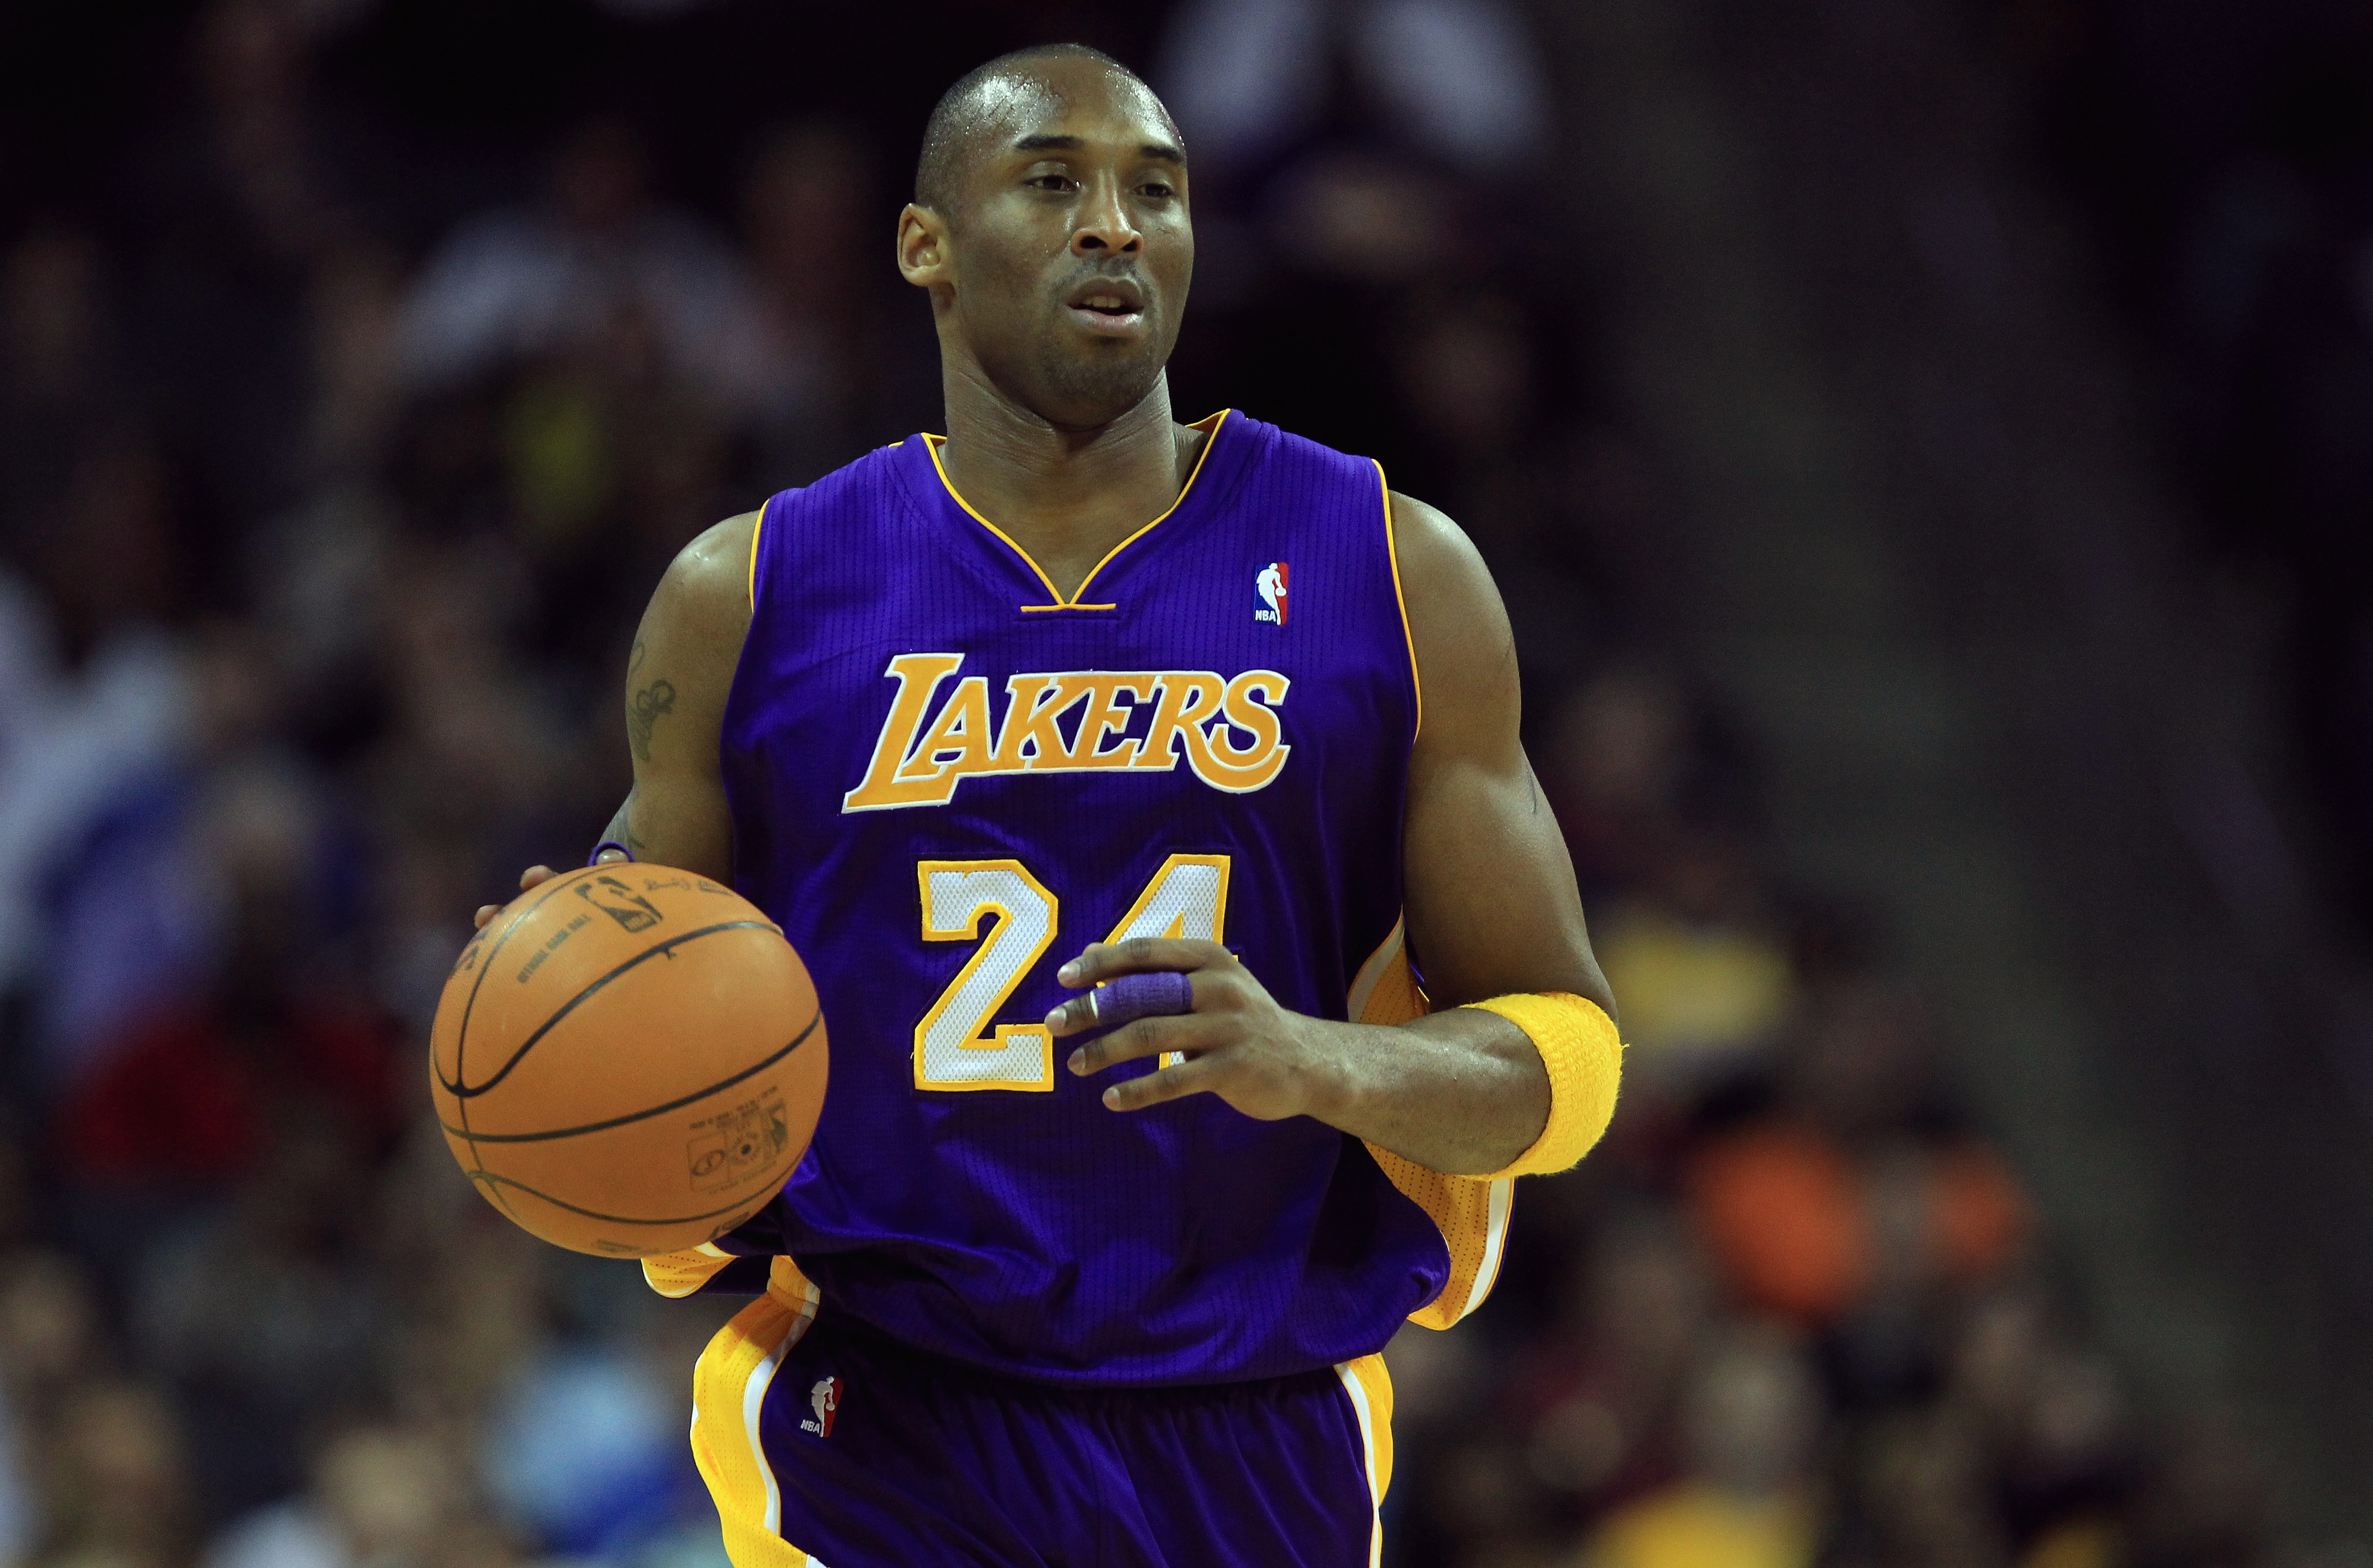 Kobe Bryant's iconic Mamba nickname retired by sports academy, NBA News